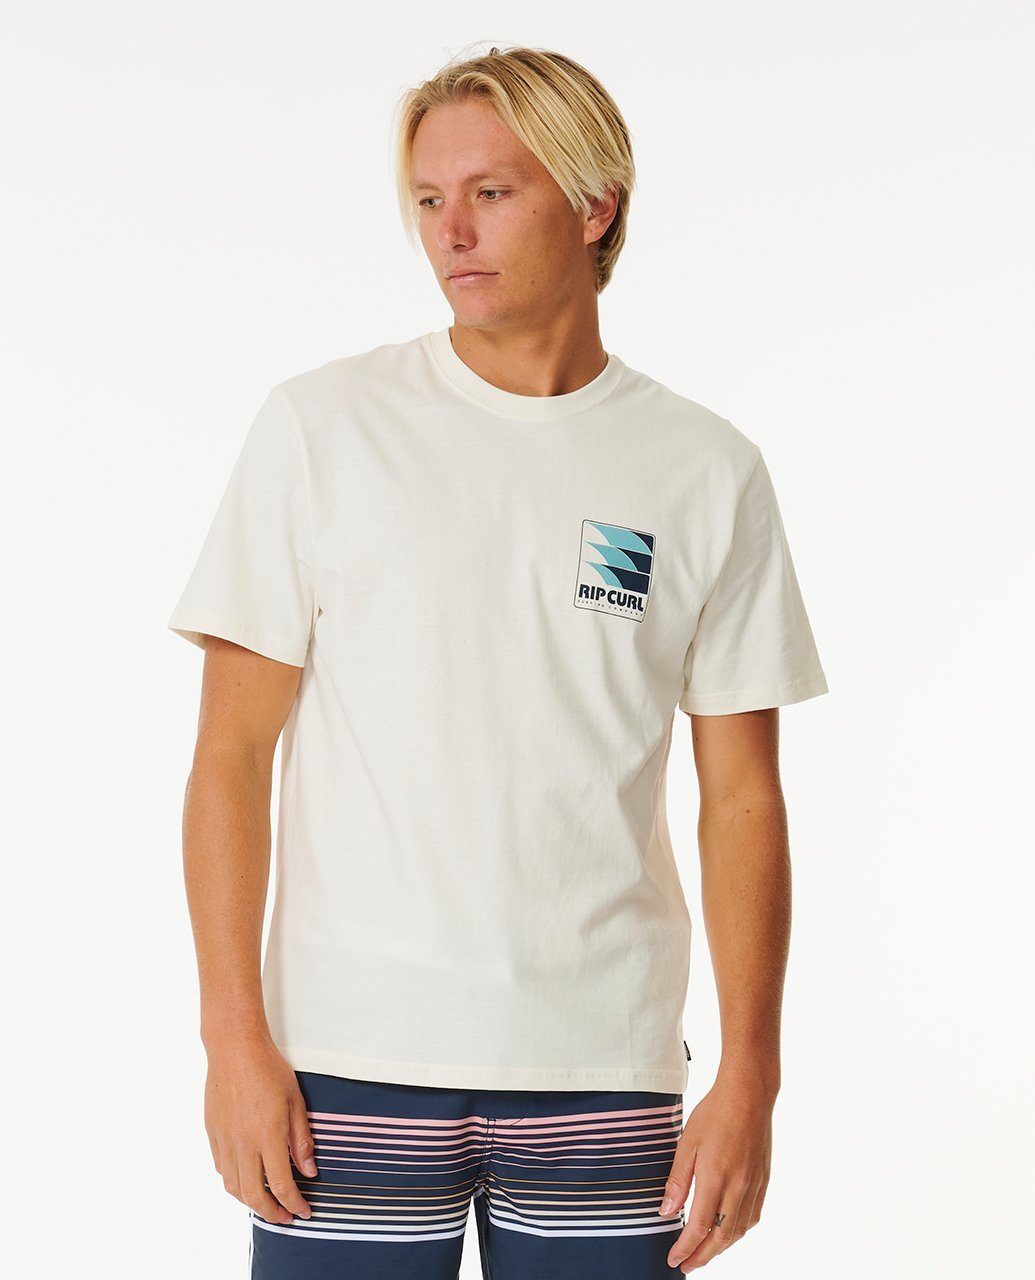 Curl T-Shirt Up Revival Rip Line Kurzärmeliges Surf bone Print-Shirt